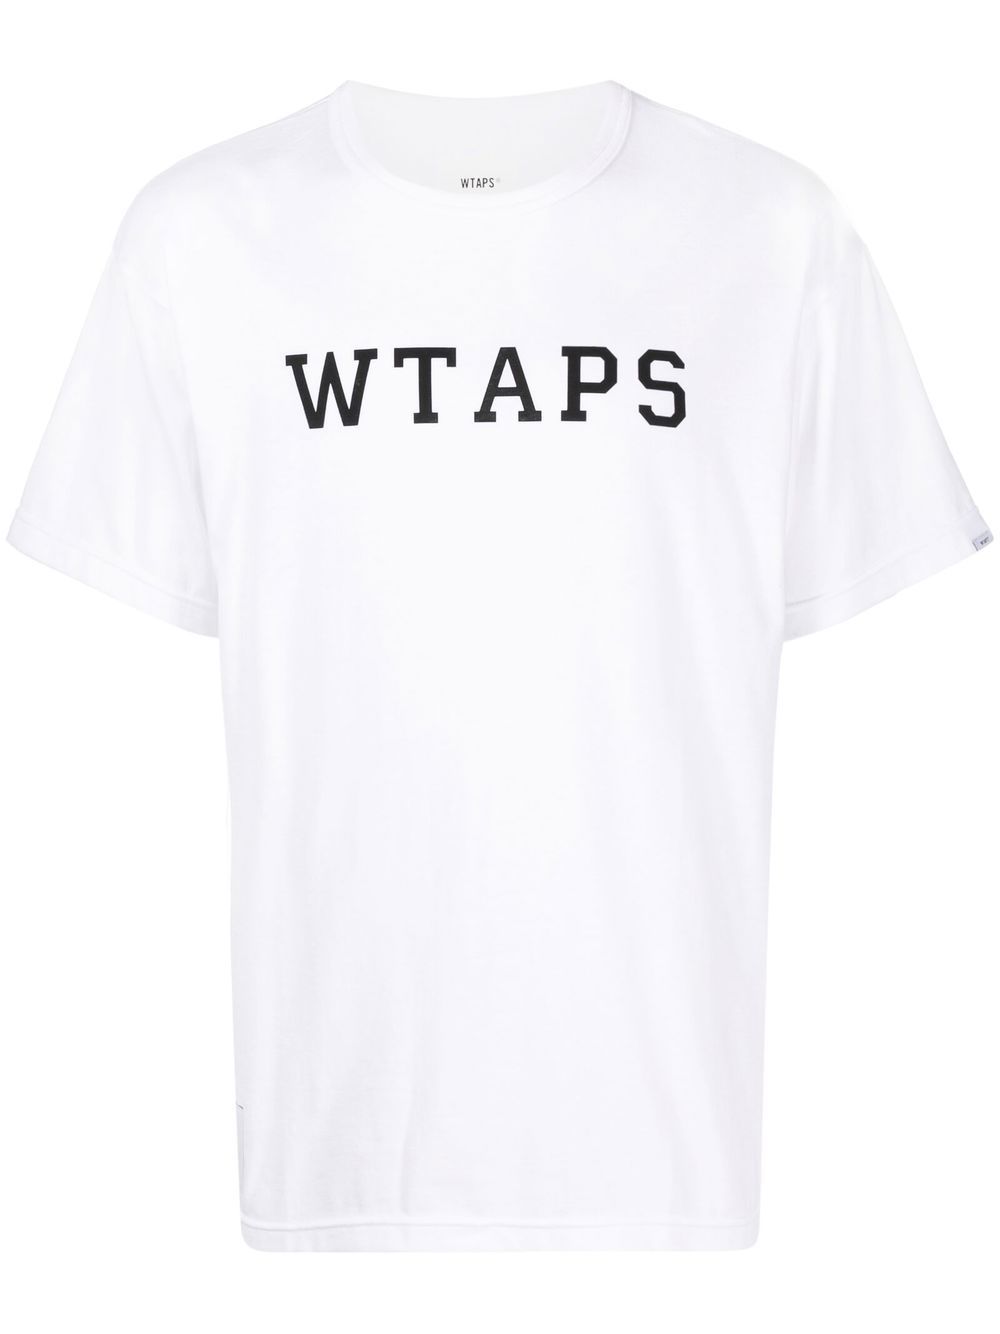 wtaps academy / ss / cotton L グレー dJfzc-m12984866539 - トップス